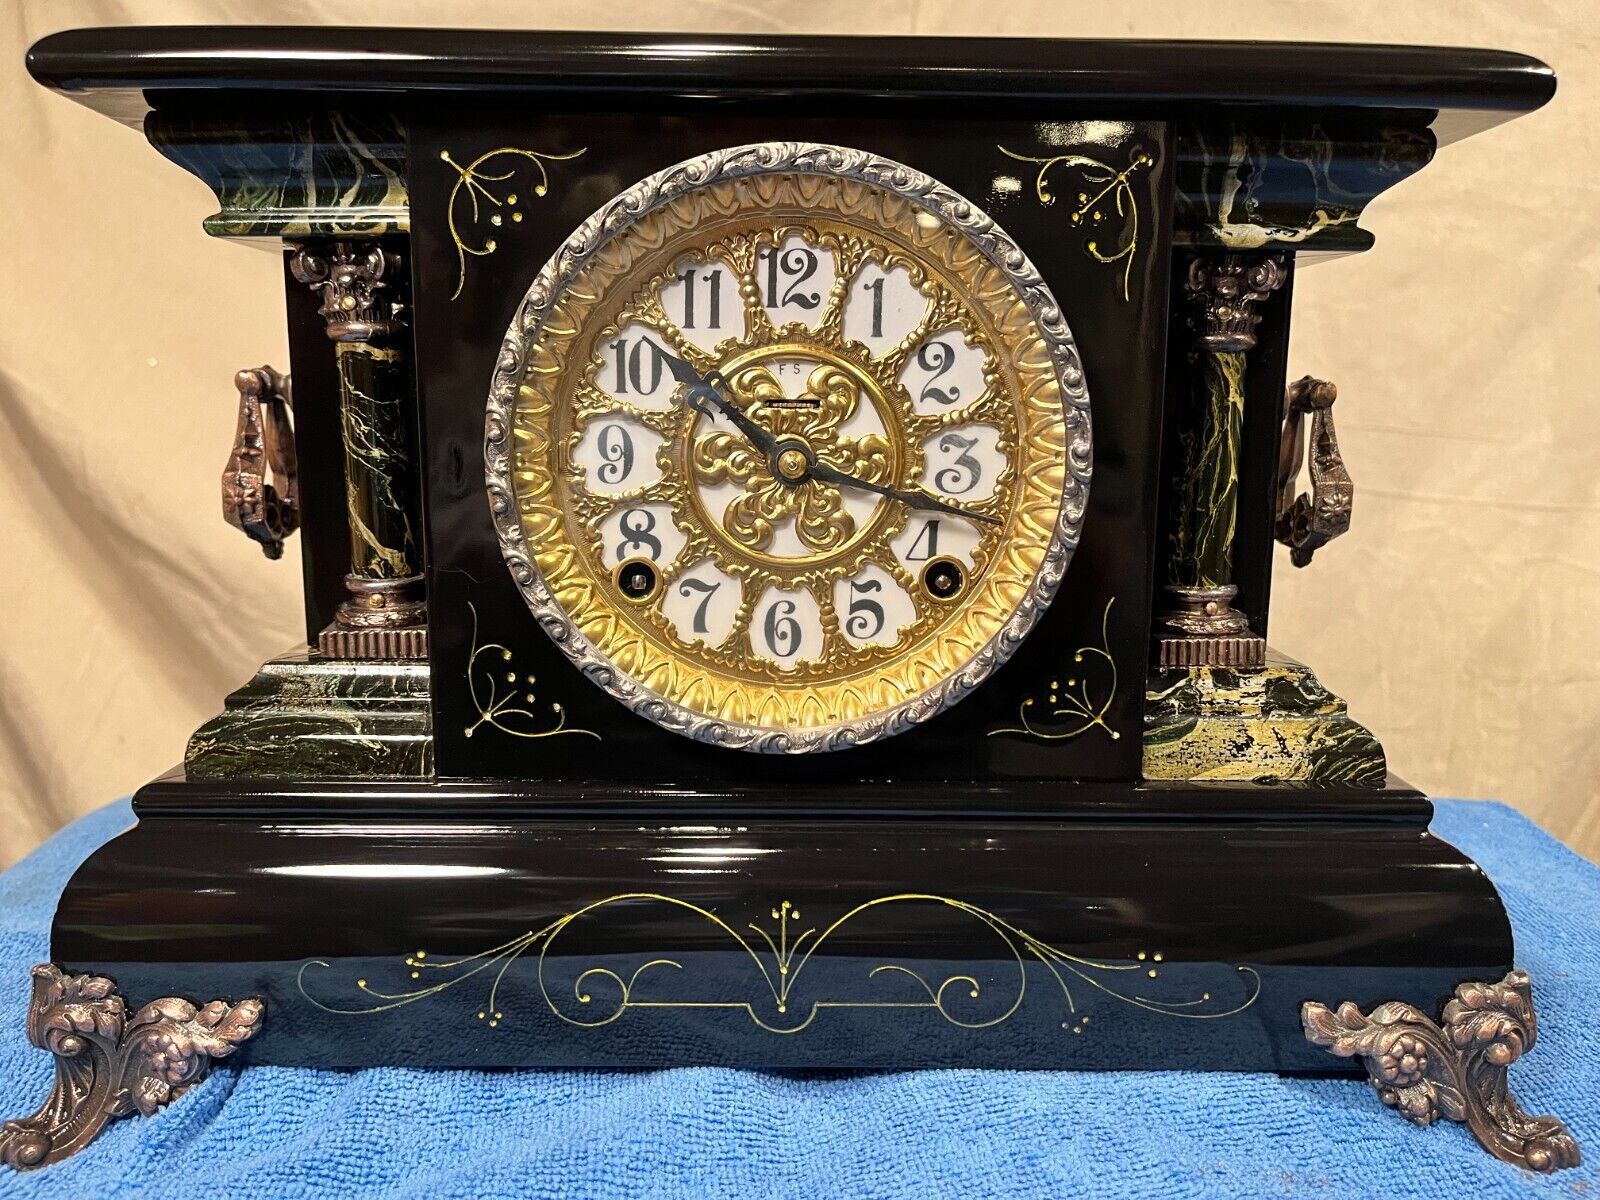 Beautiful 1901 Ingraham Mantel Clock - Fully Restored